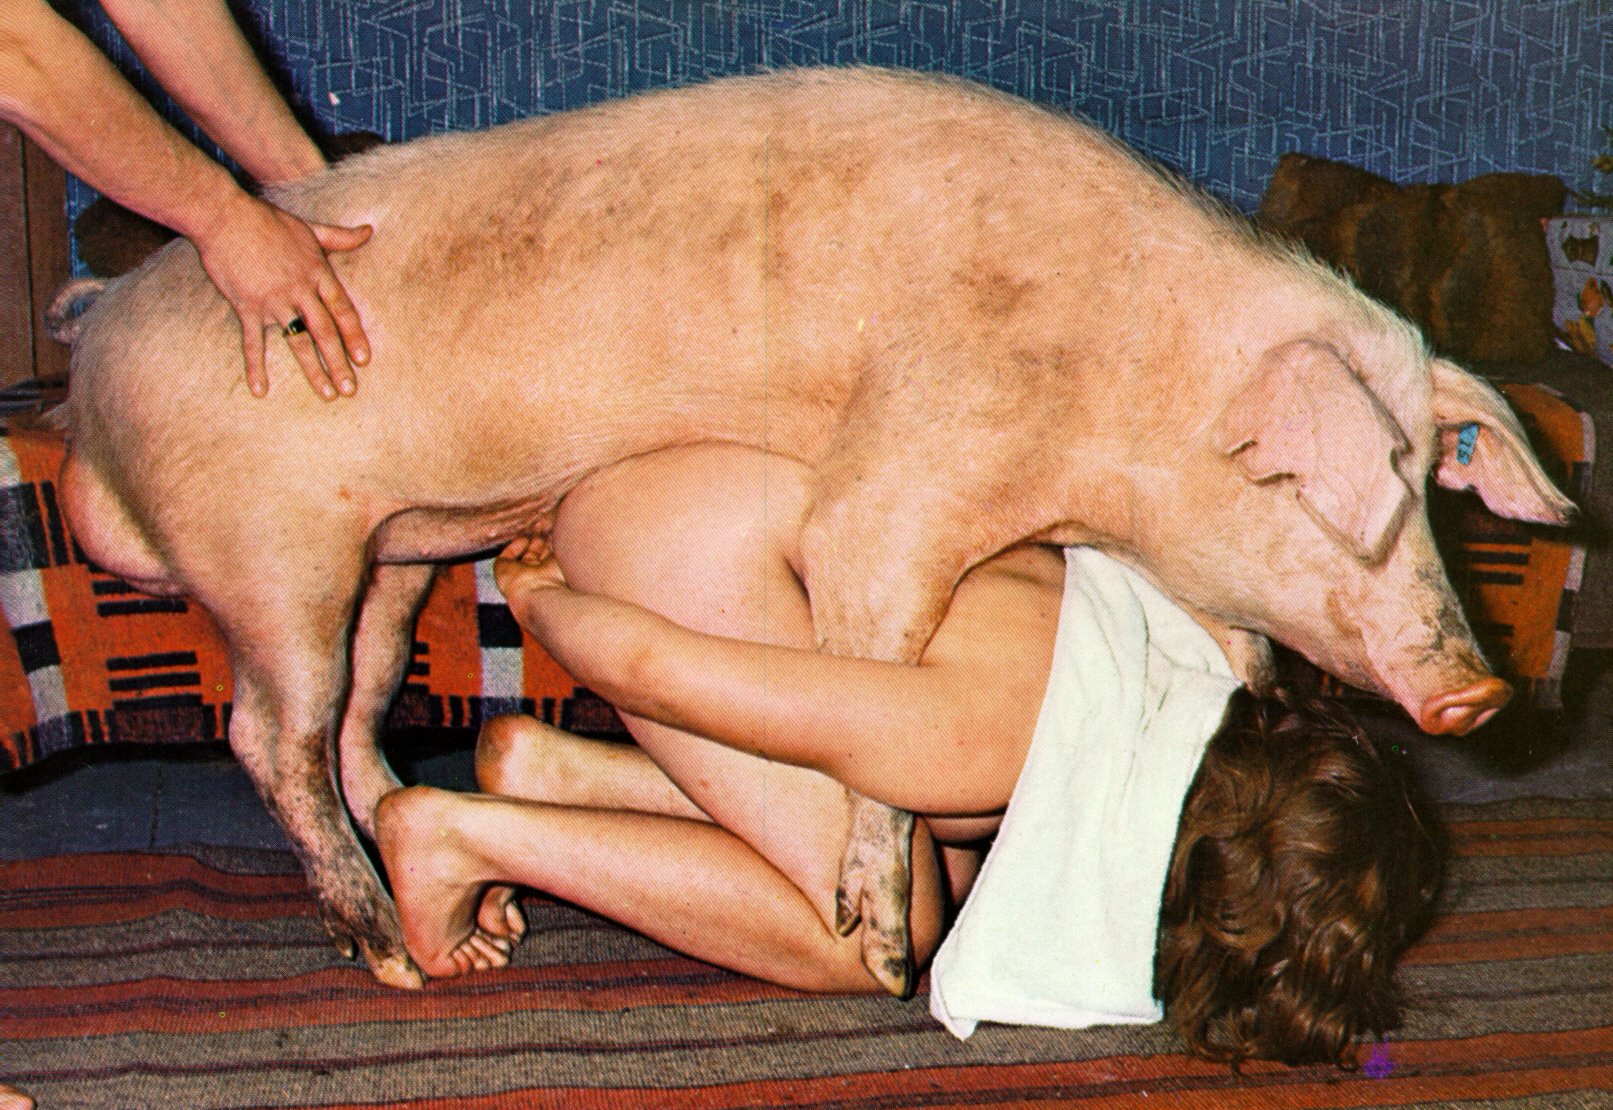 Pig Porn Fuck Girl.